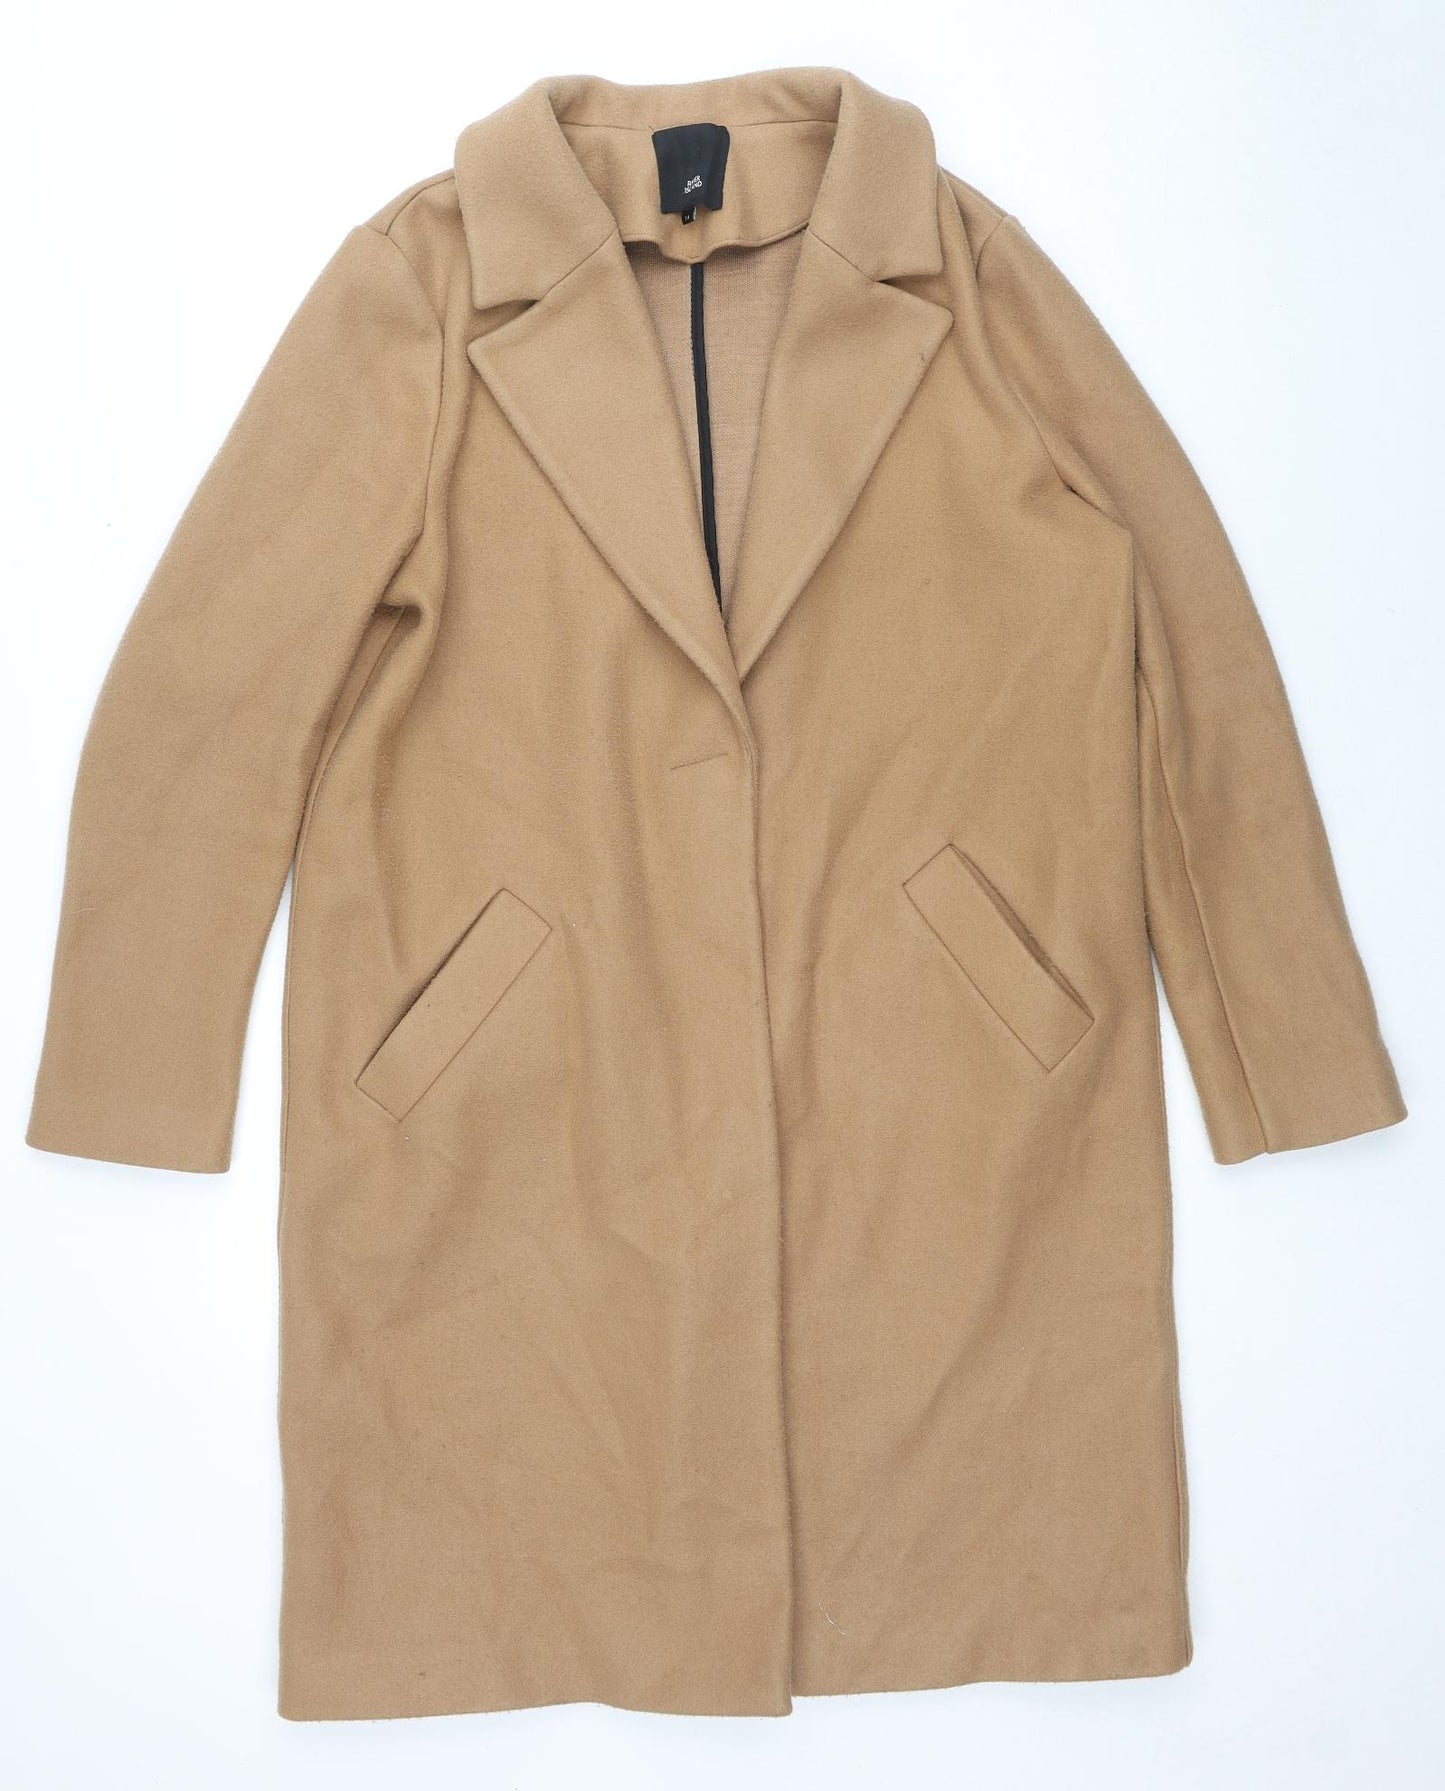 River Island Womens Beige Overcoat Coat Size 14 Button